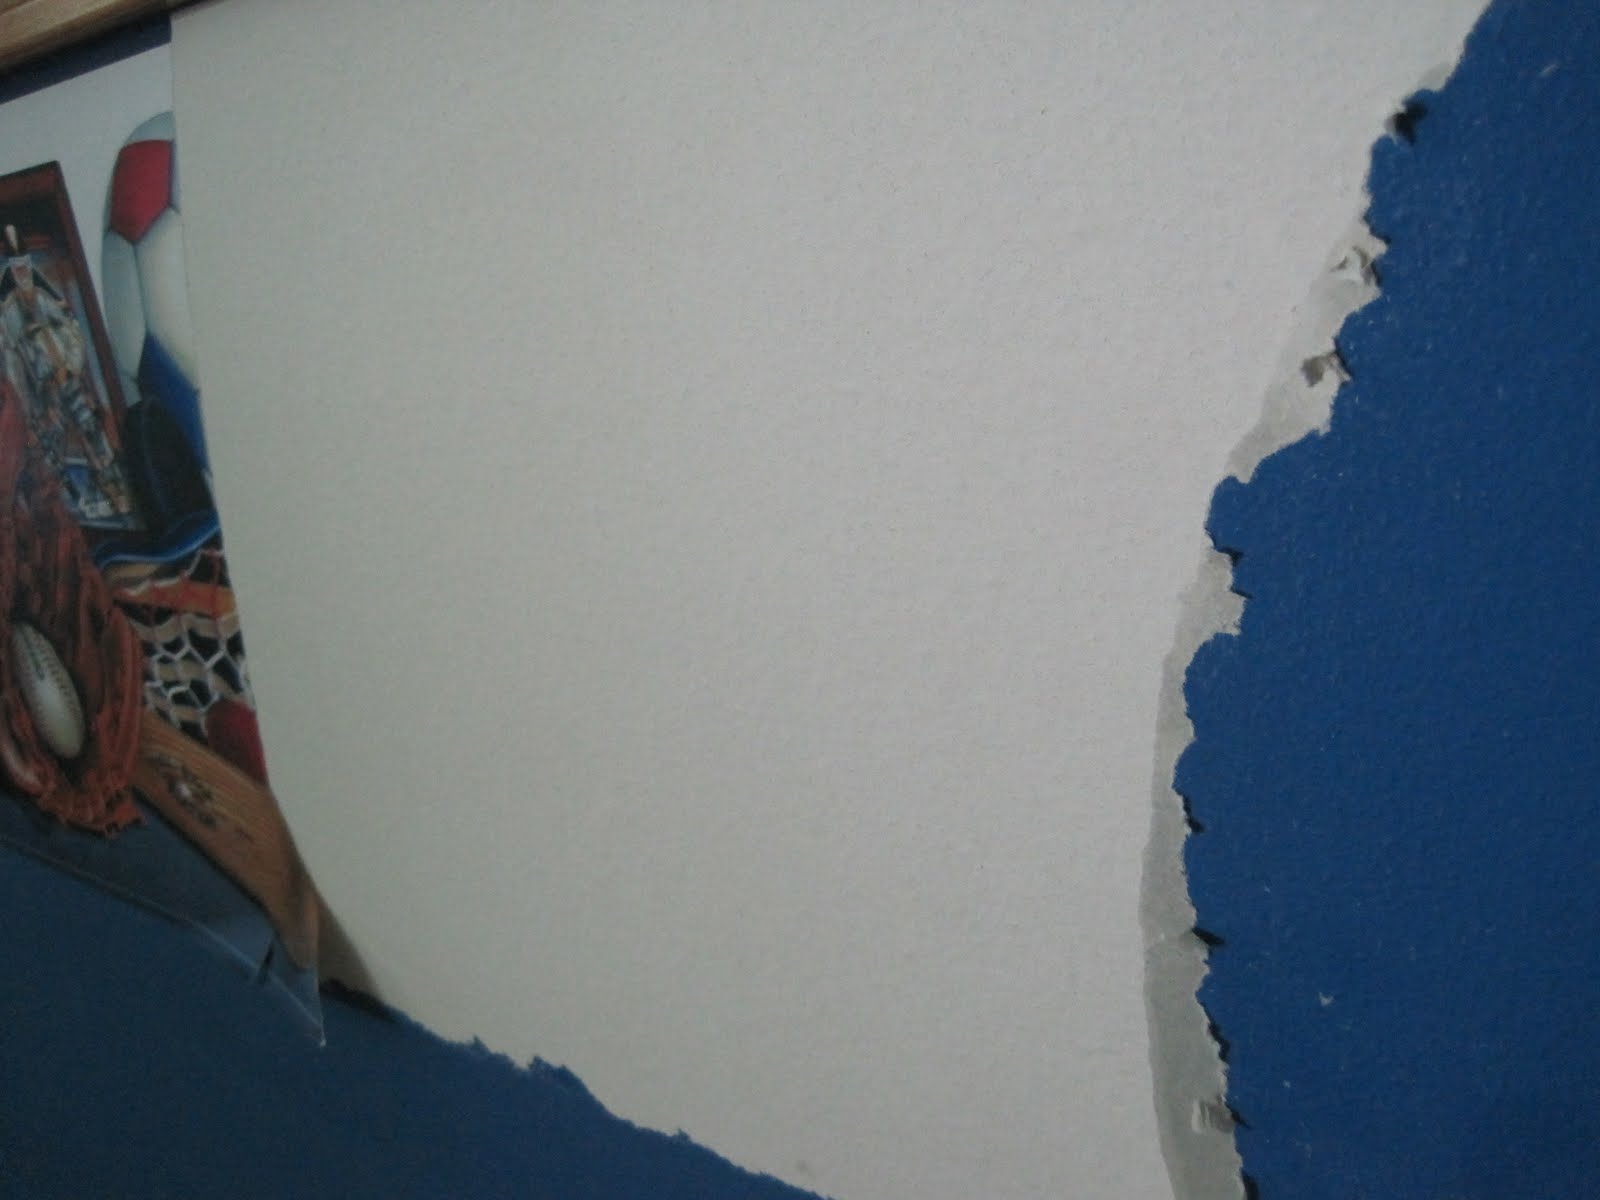 disney princess bow wallpaper border easiest way to remove wallpaper